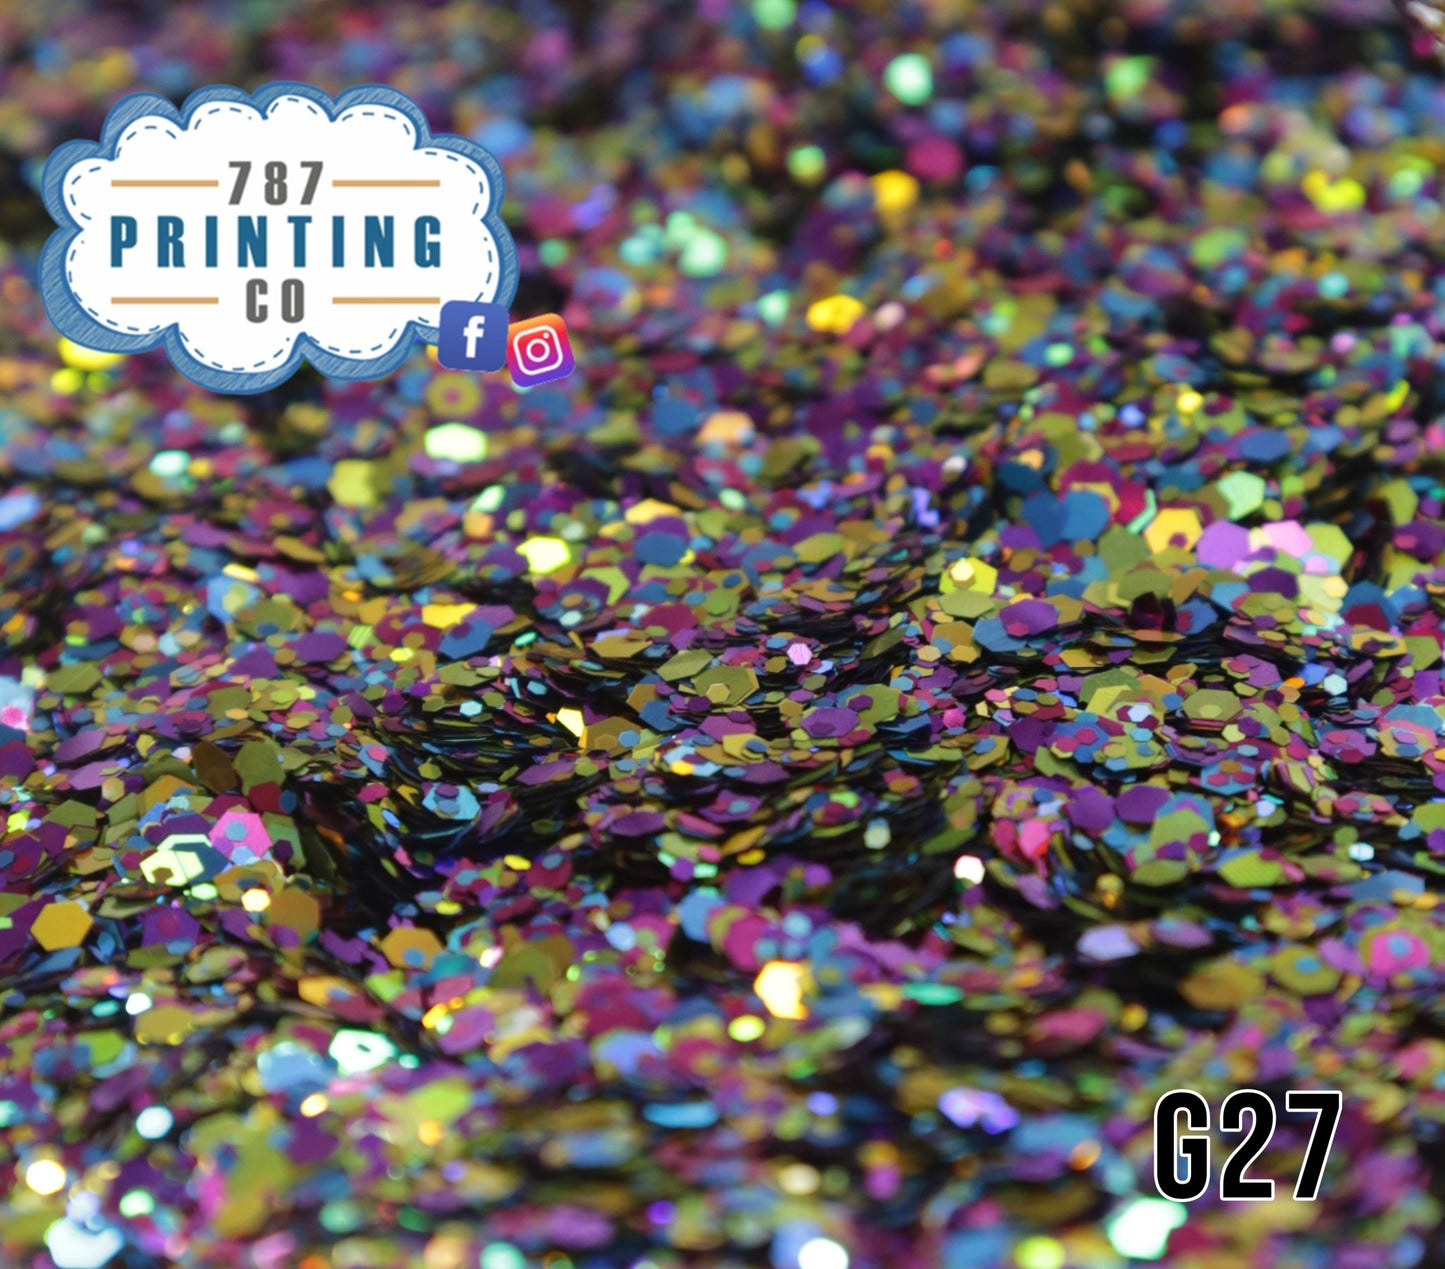 Ponce Chunky Glitter (G27) - 787 Printing Co.